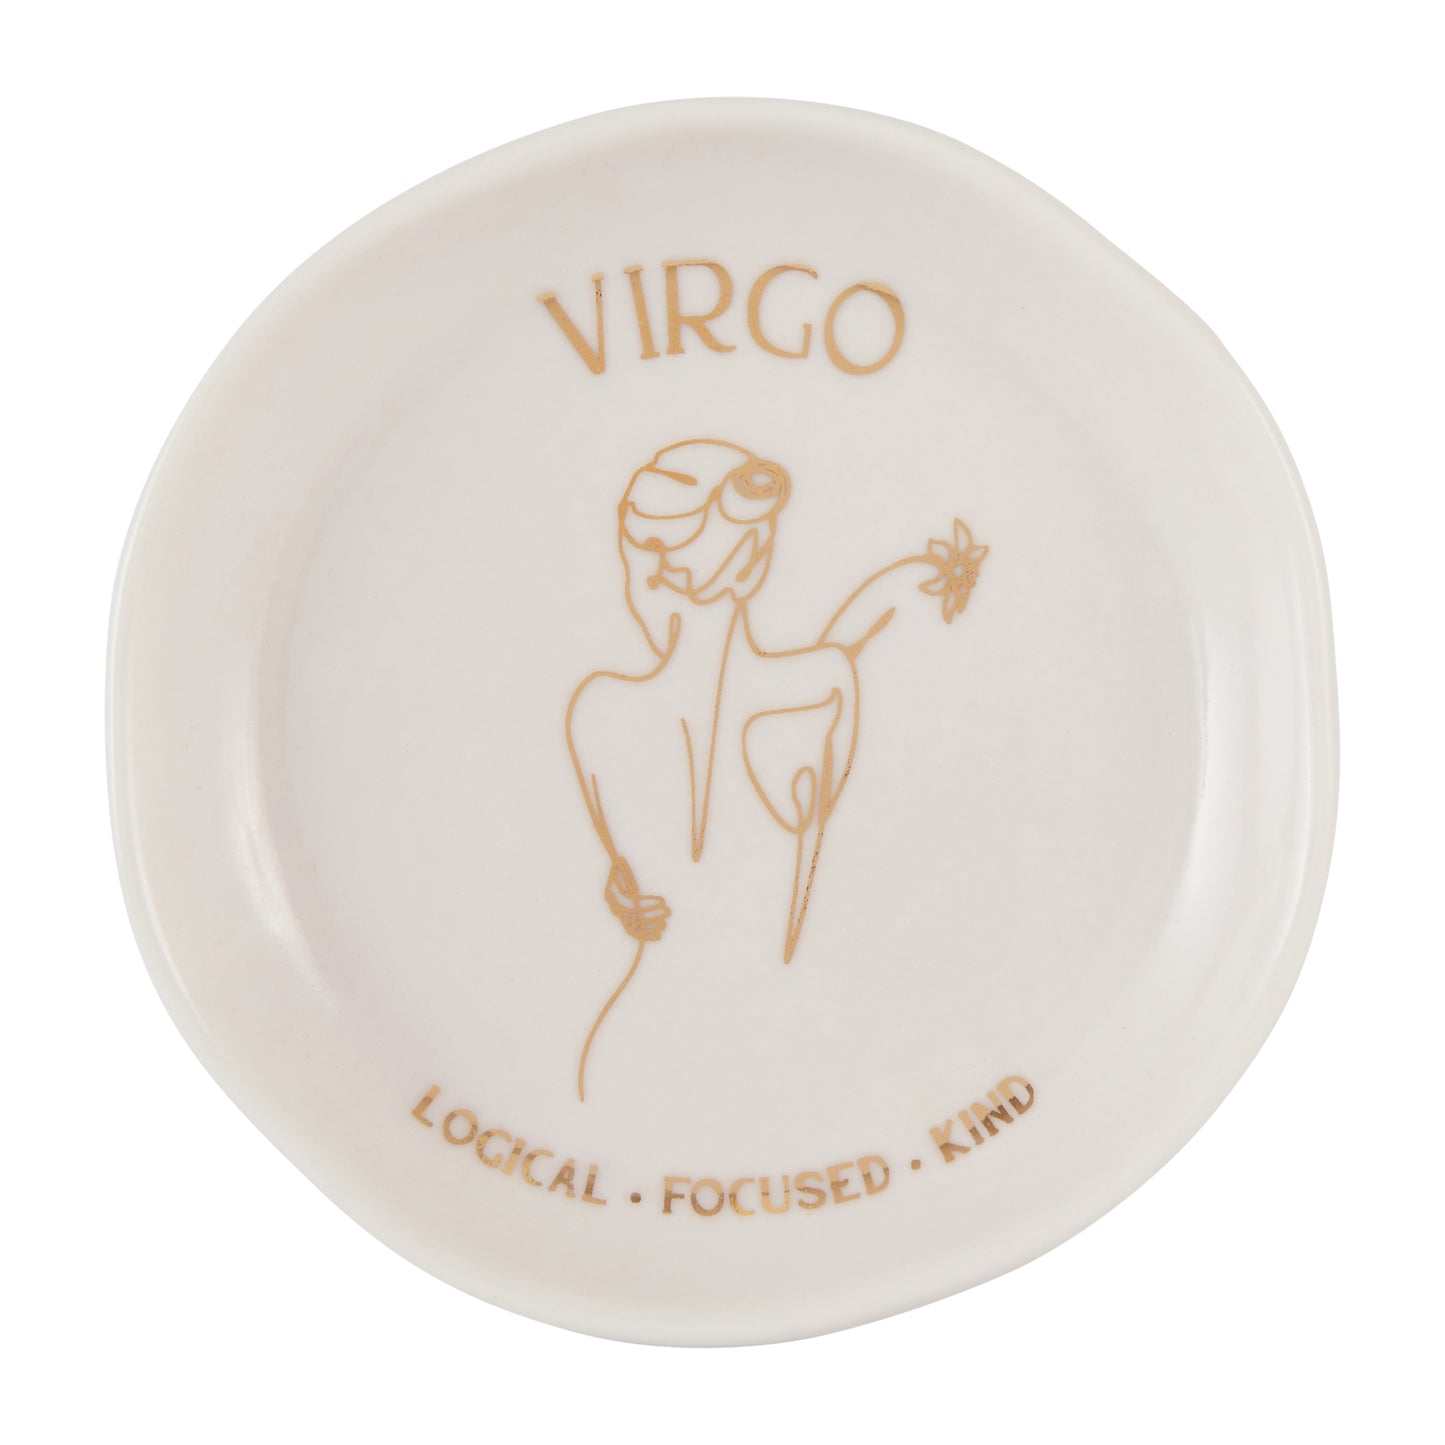 Virgo Trinket Dish